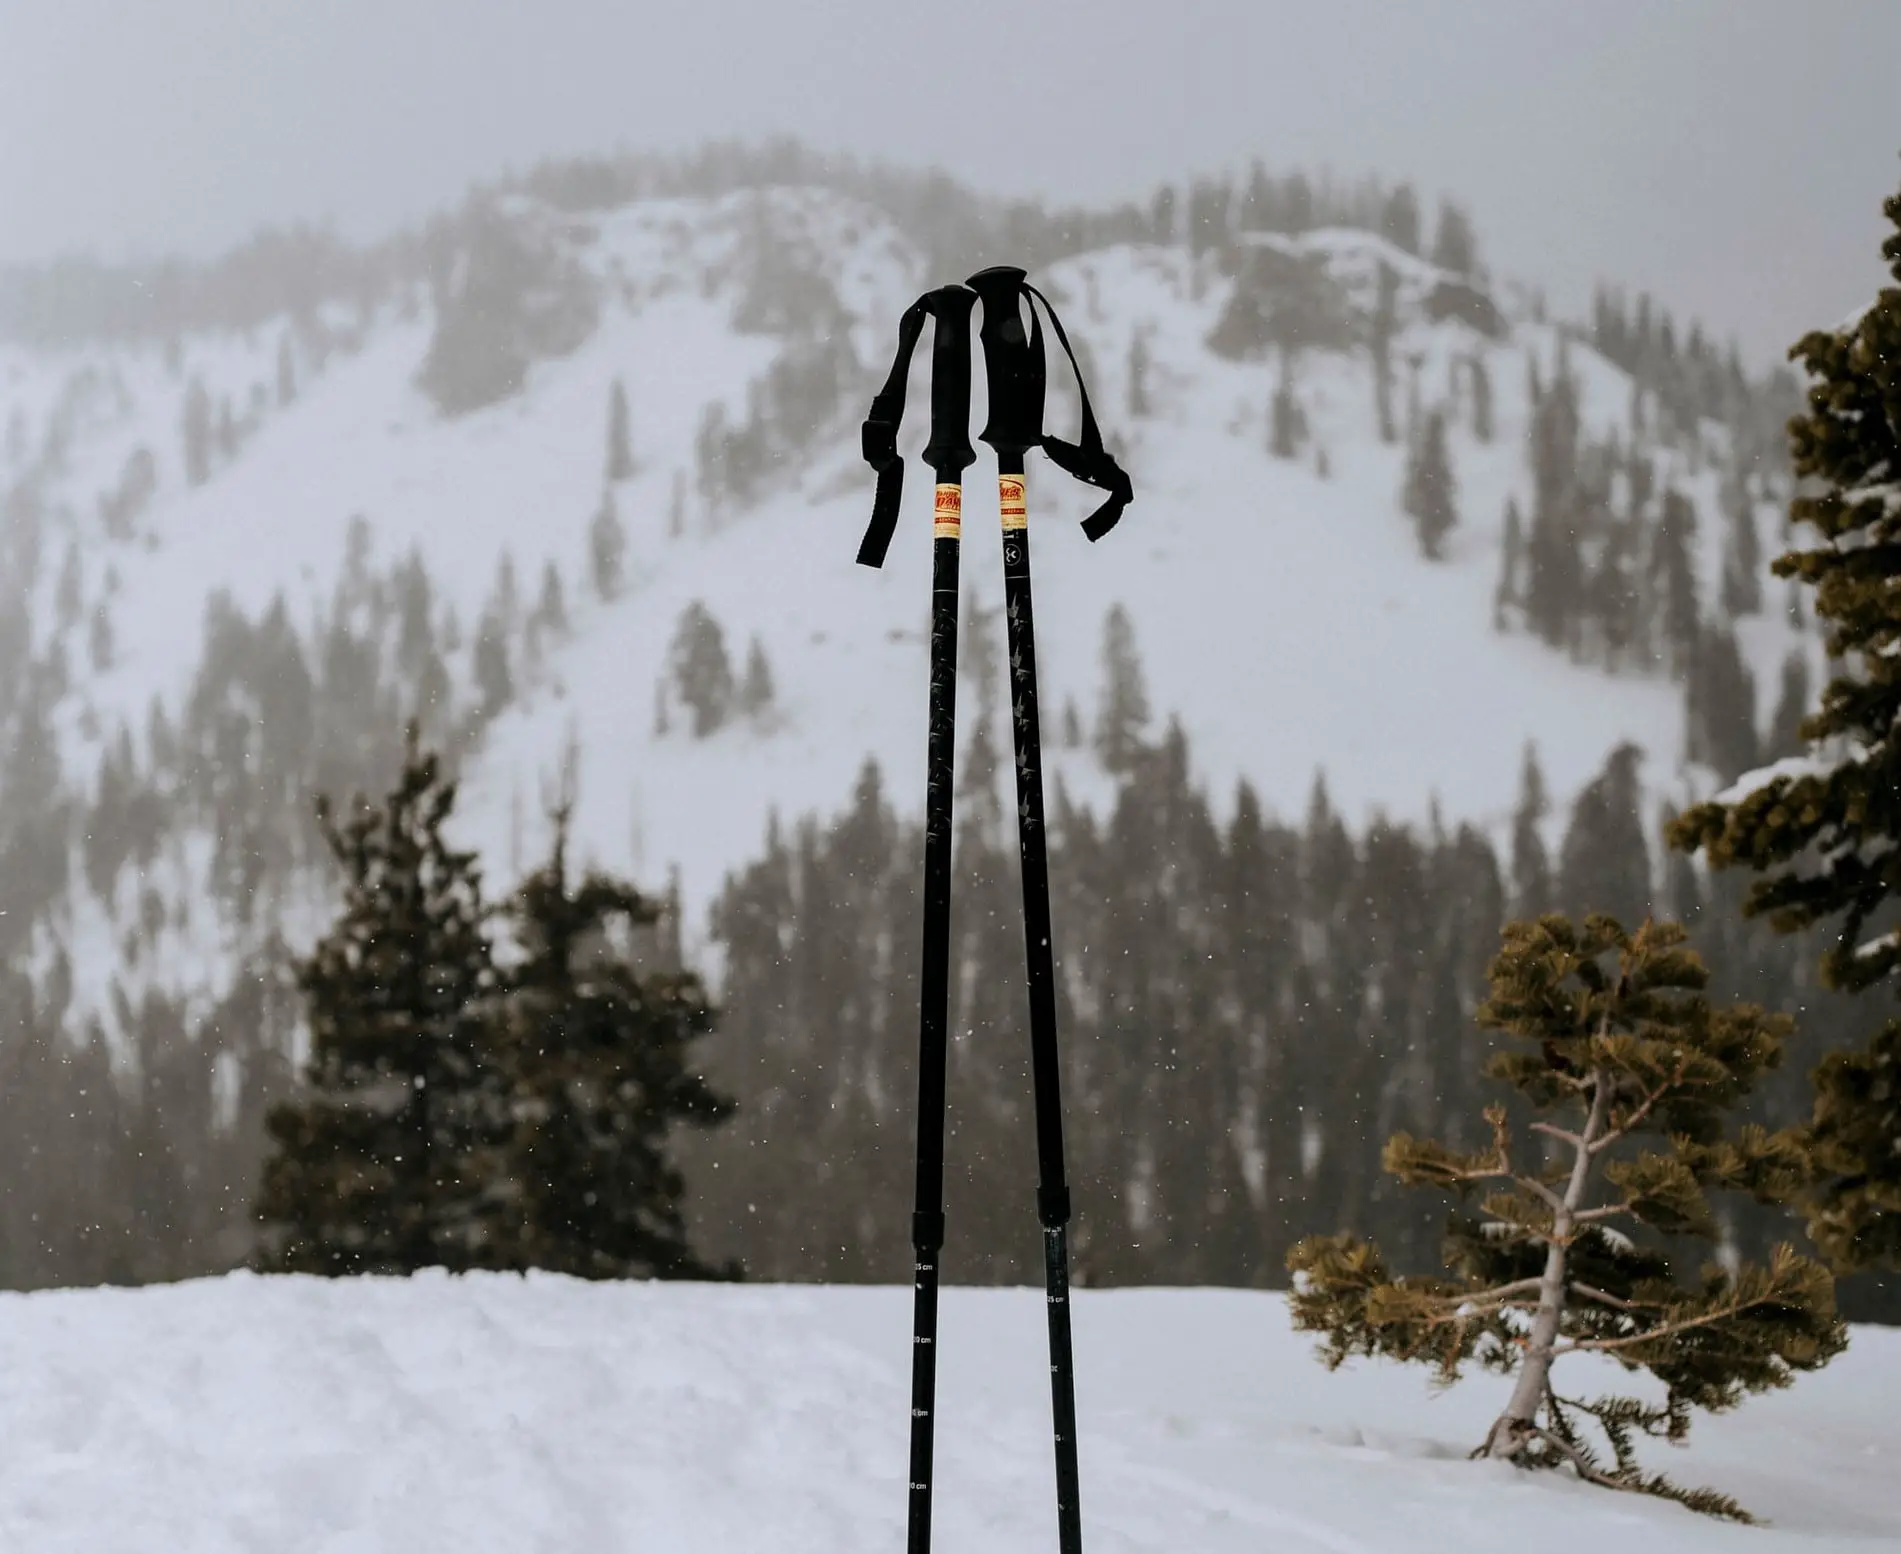 Pair of snowshoe trekking poles